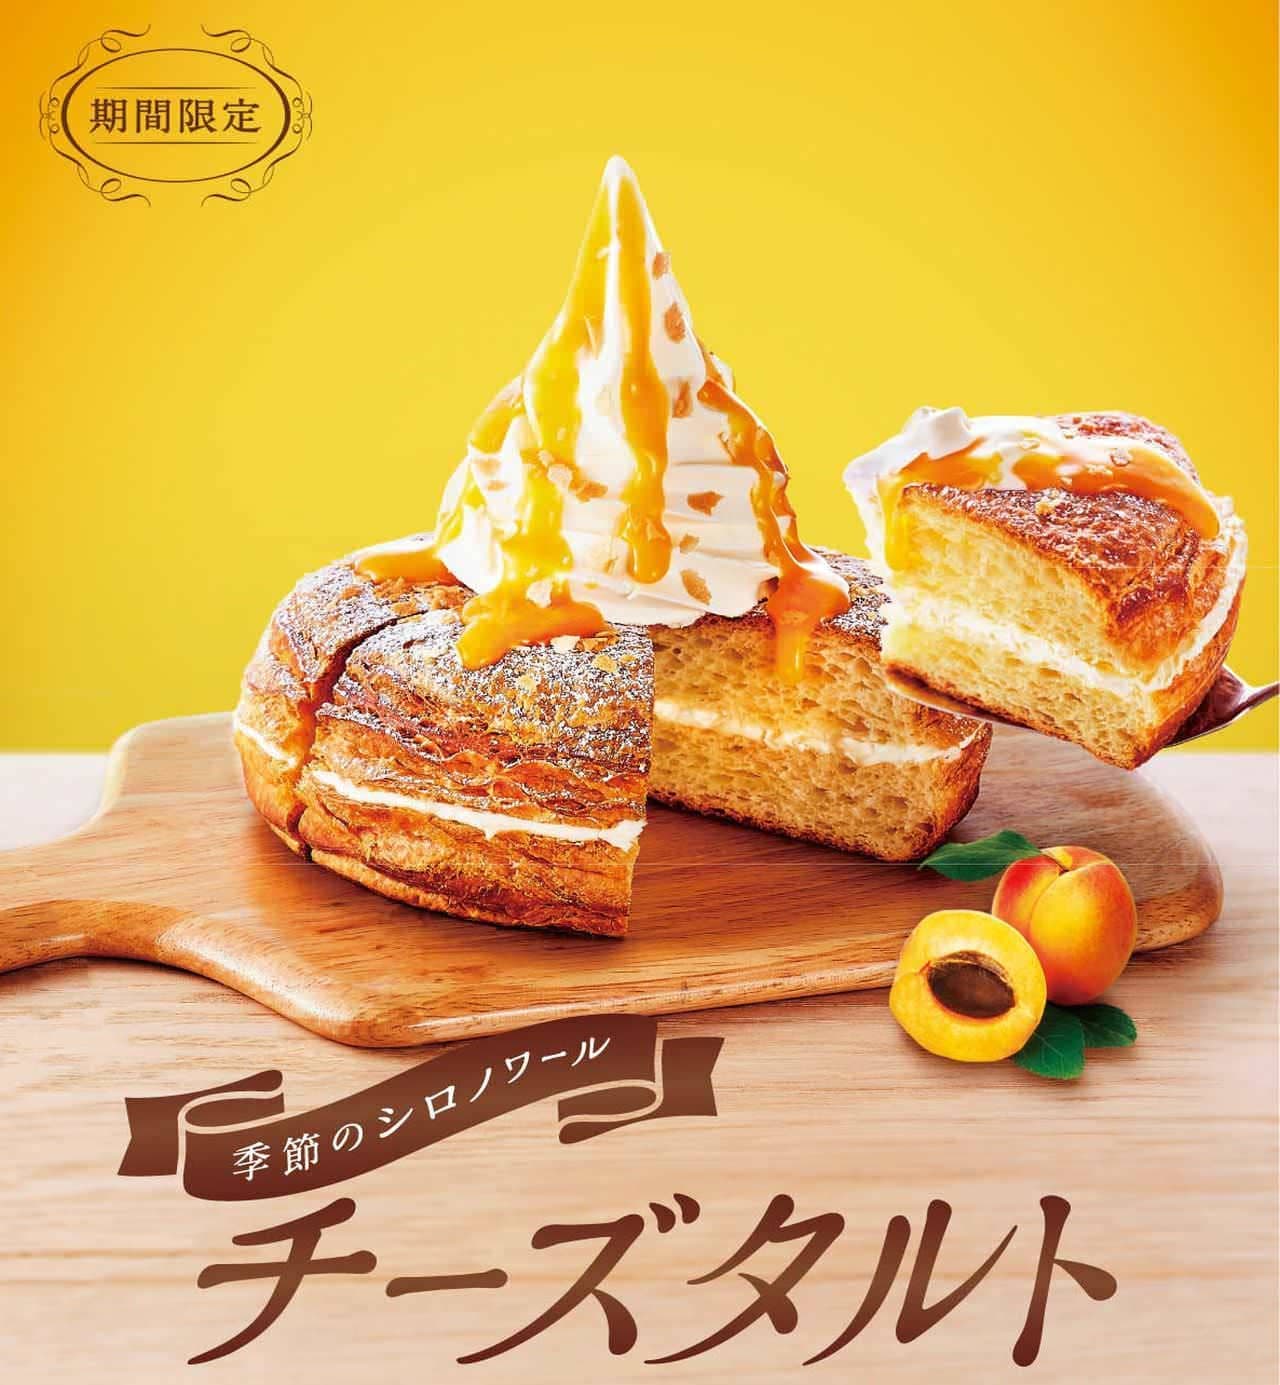 Komeda's seasonal Shiro Noir "cheese tart"